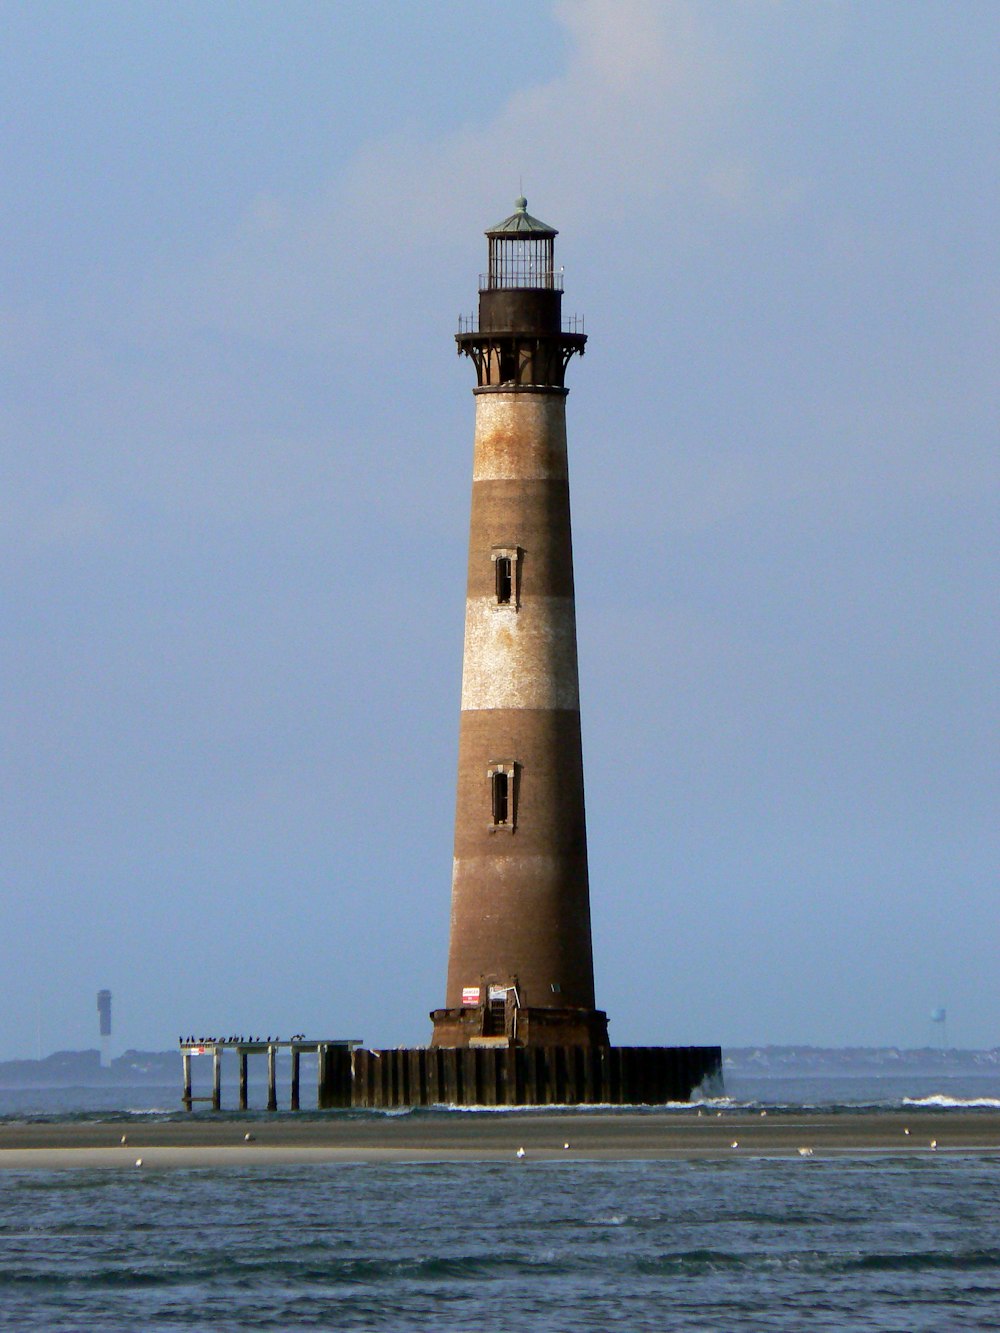 a lighthouse on a pier